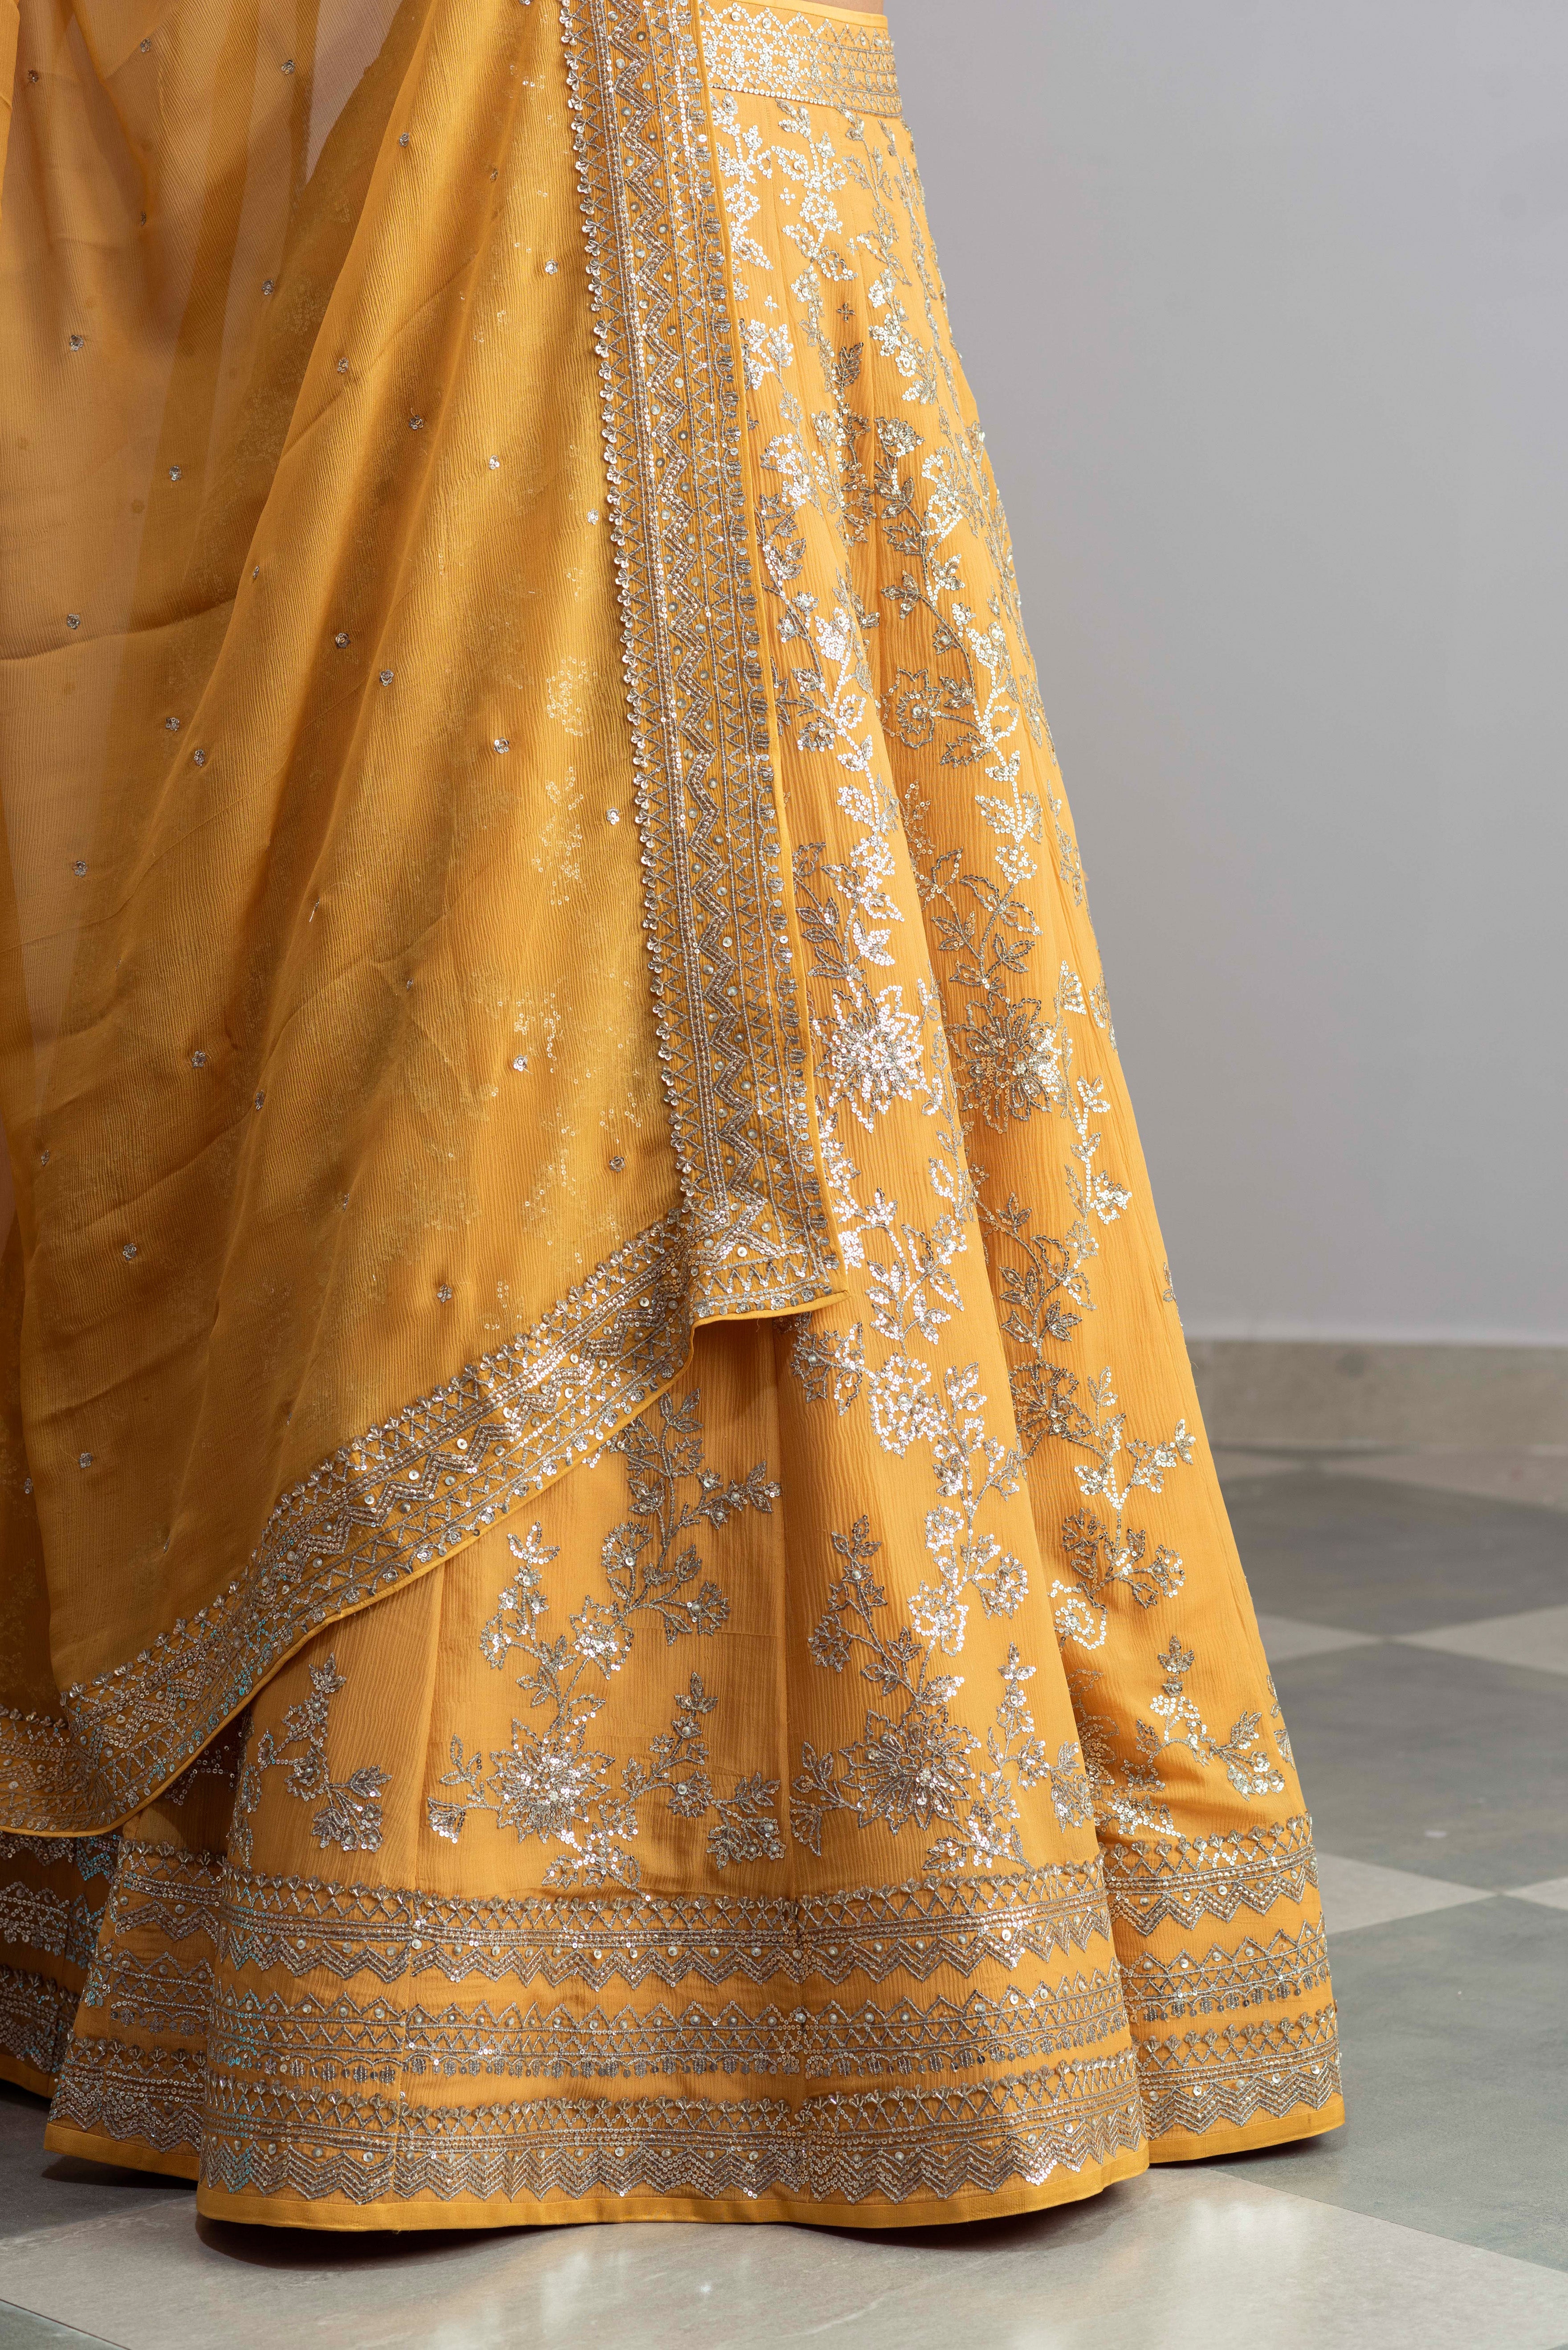 Anushree Reddy - Sharar - Mango Embroidered Lehenga Set